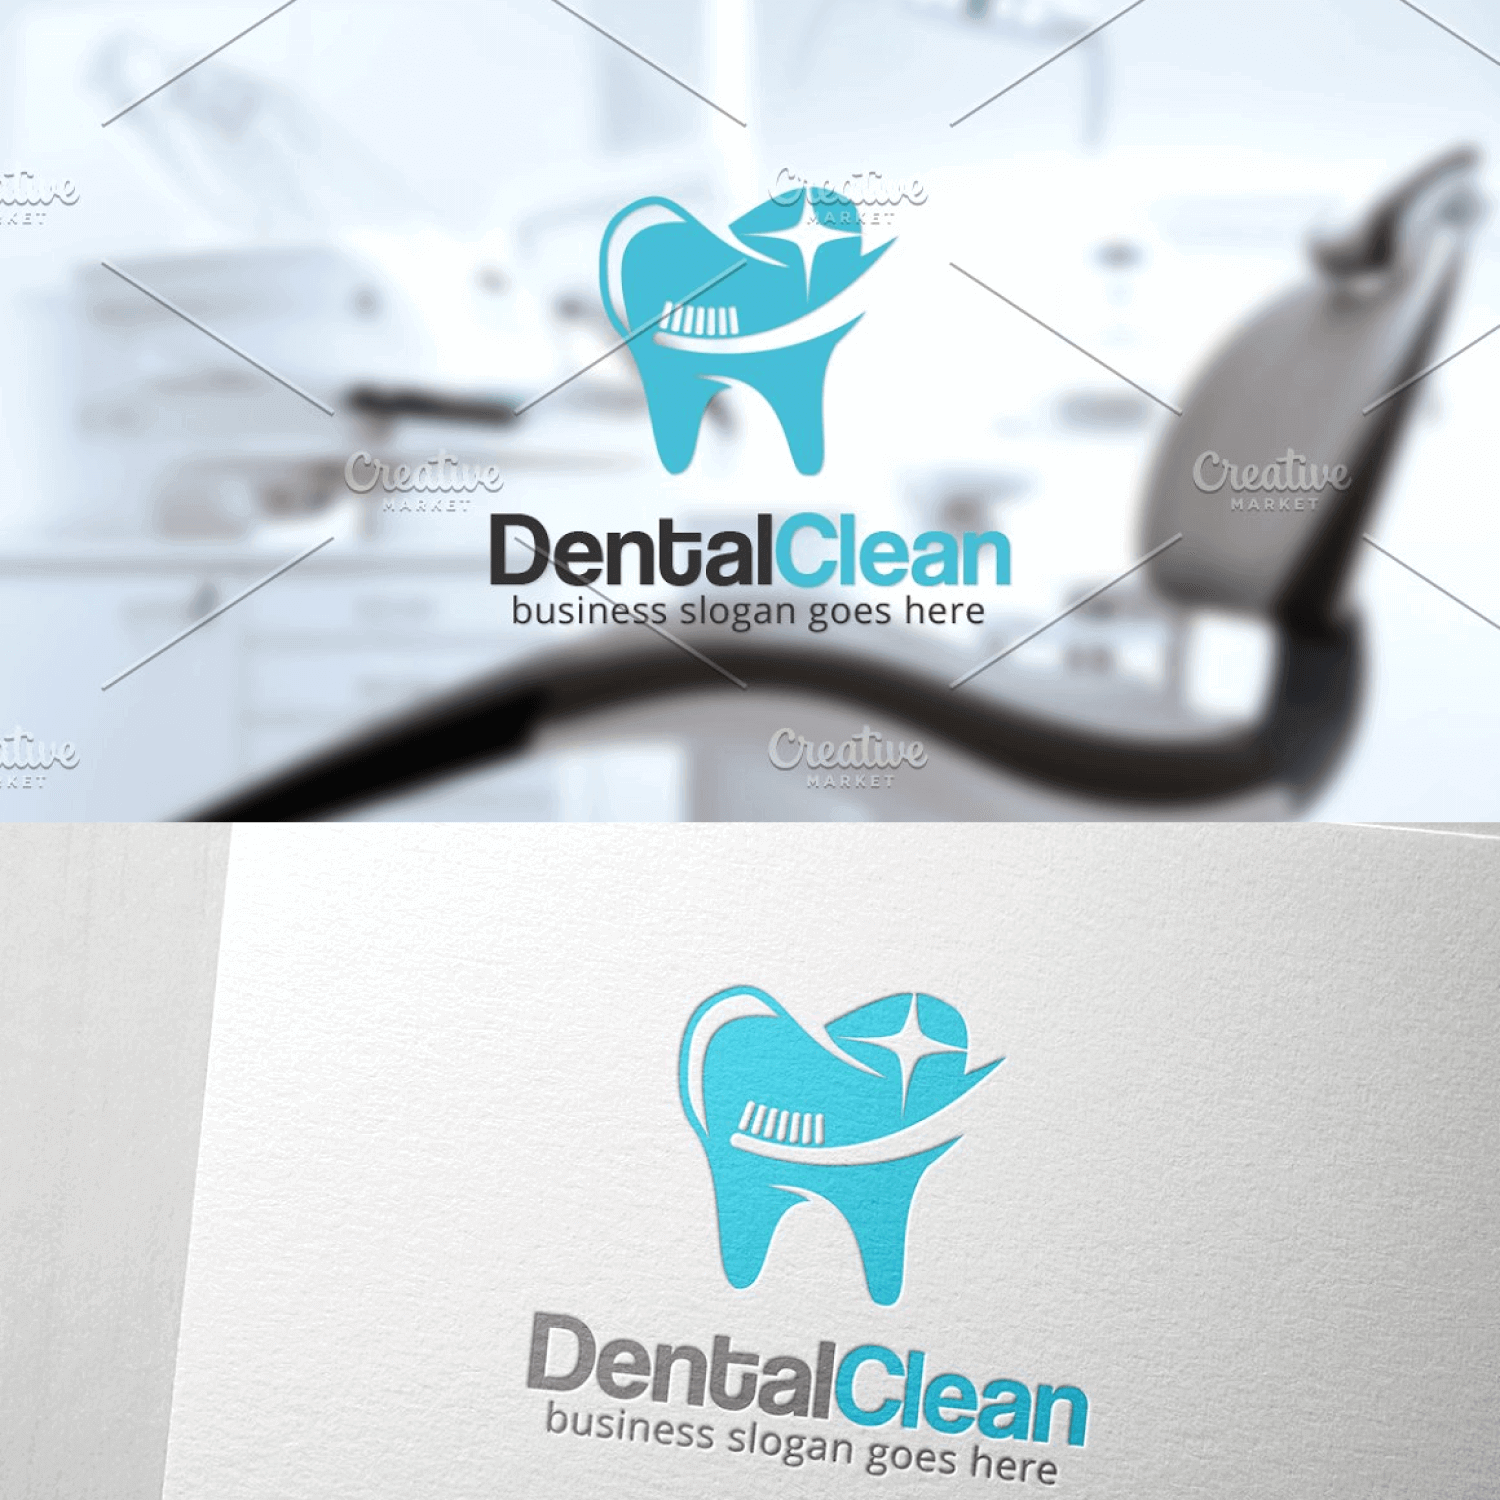 DentalClean in the Creative Market.